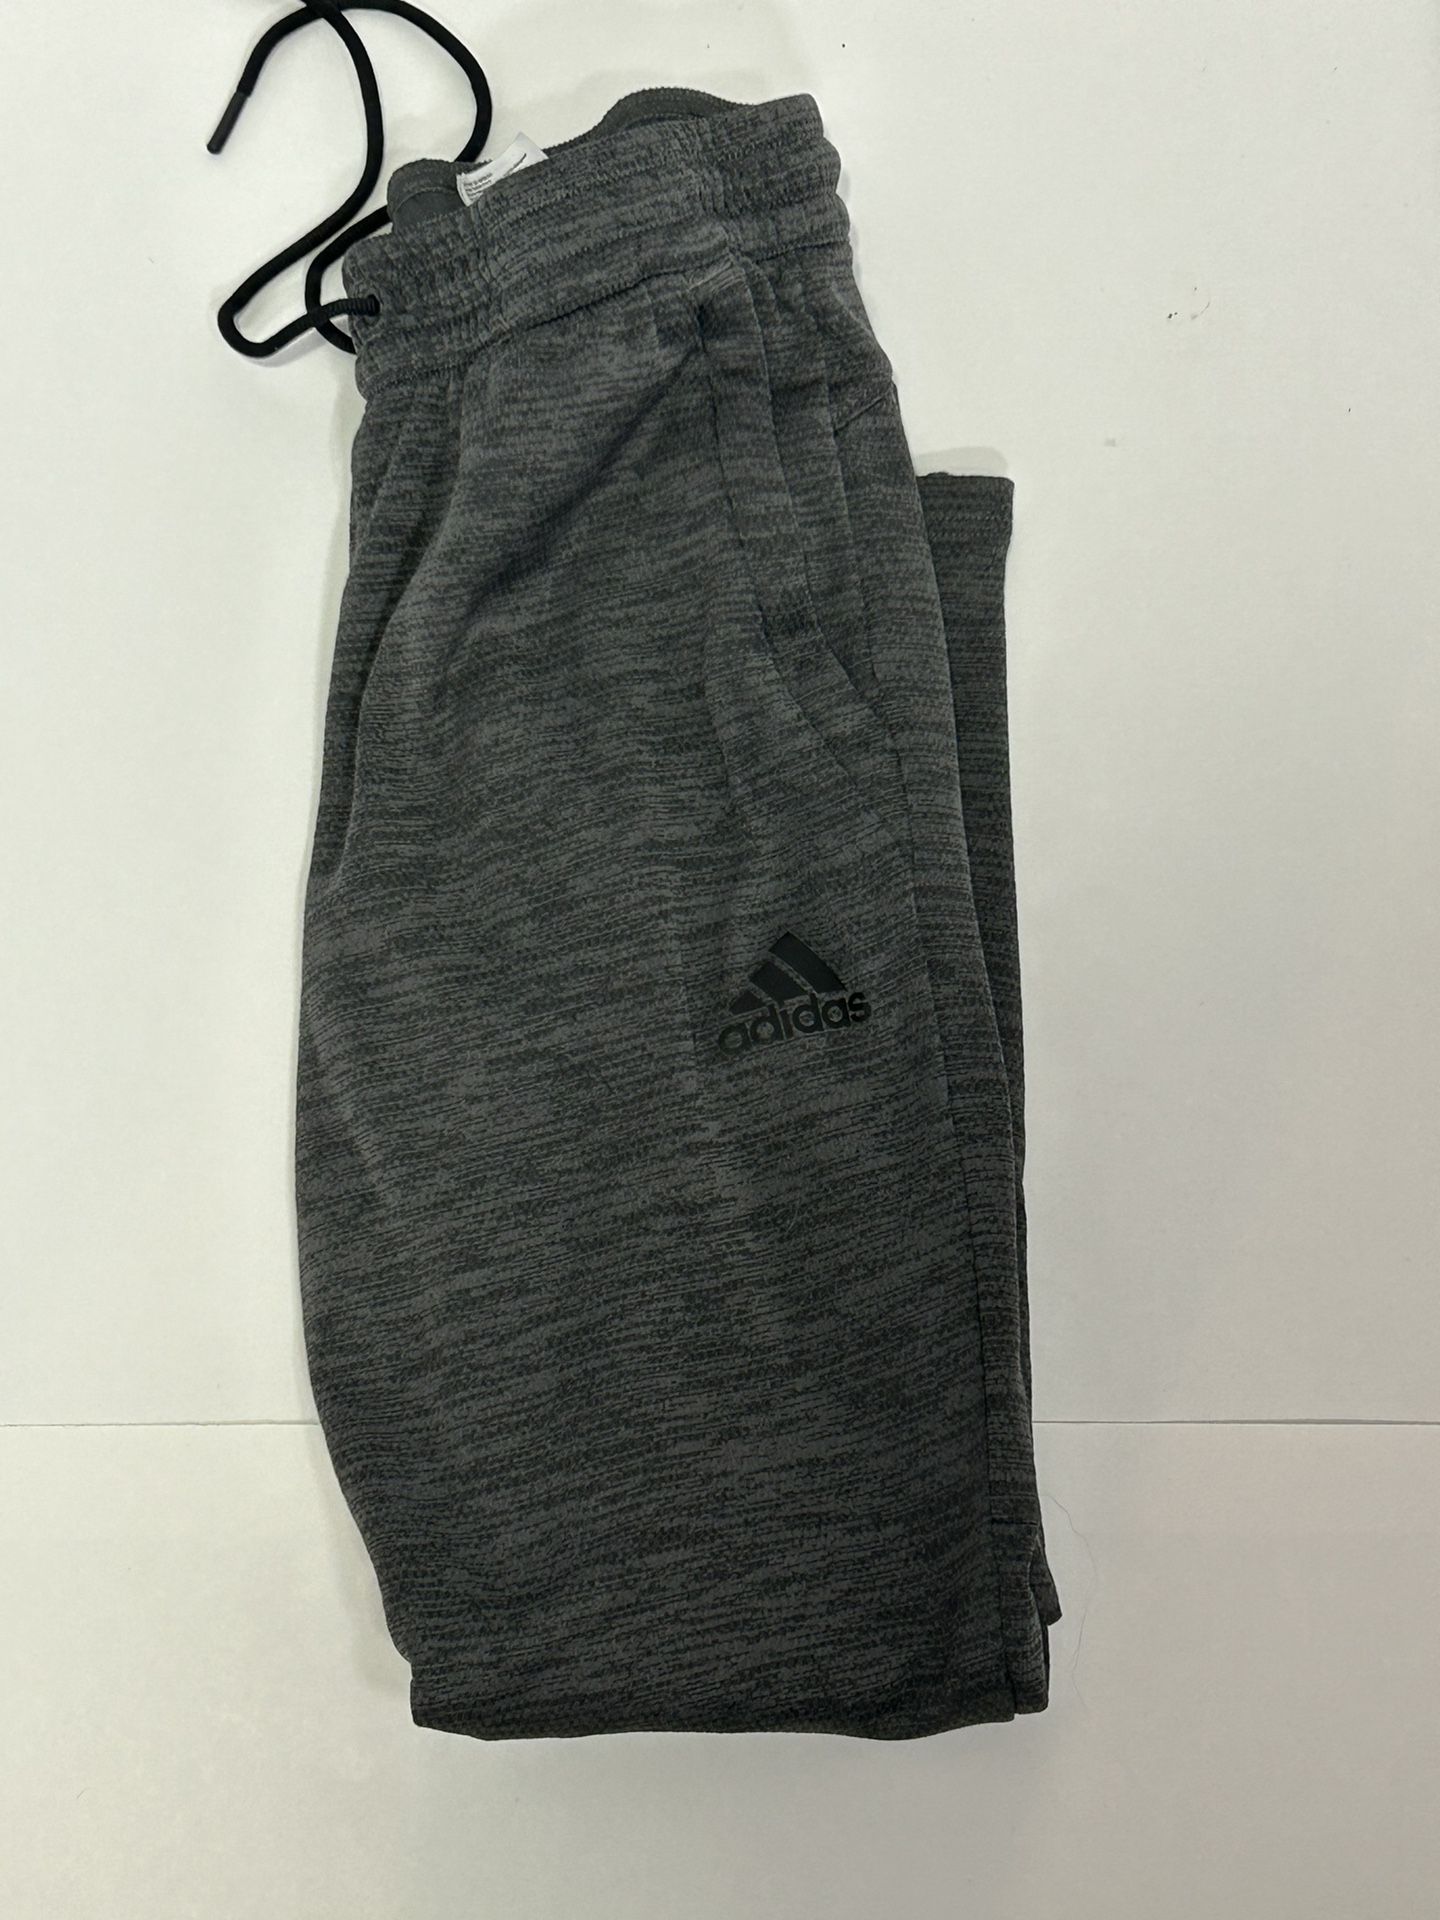 Adidas Jogger Sweatpants Size Small